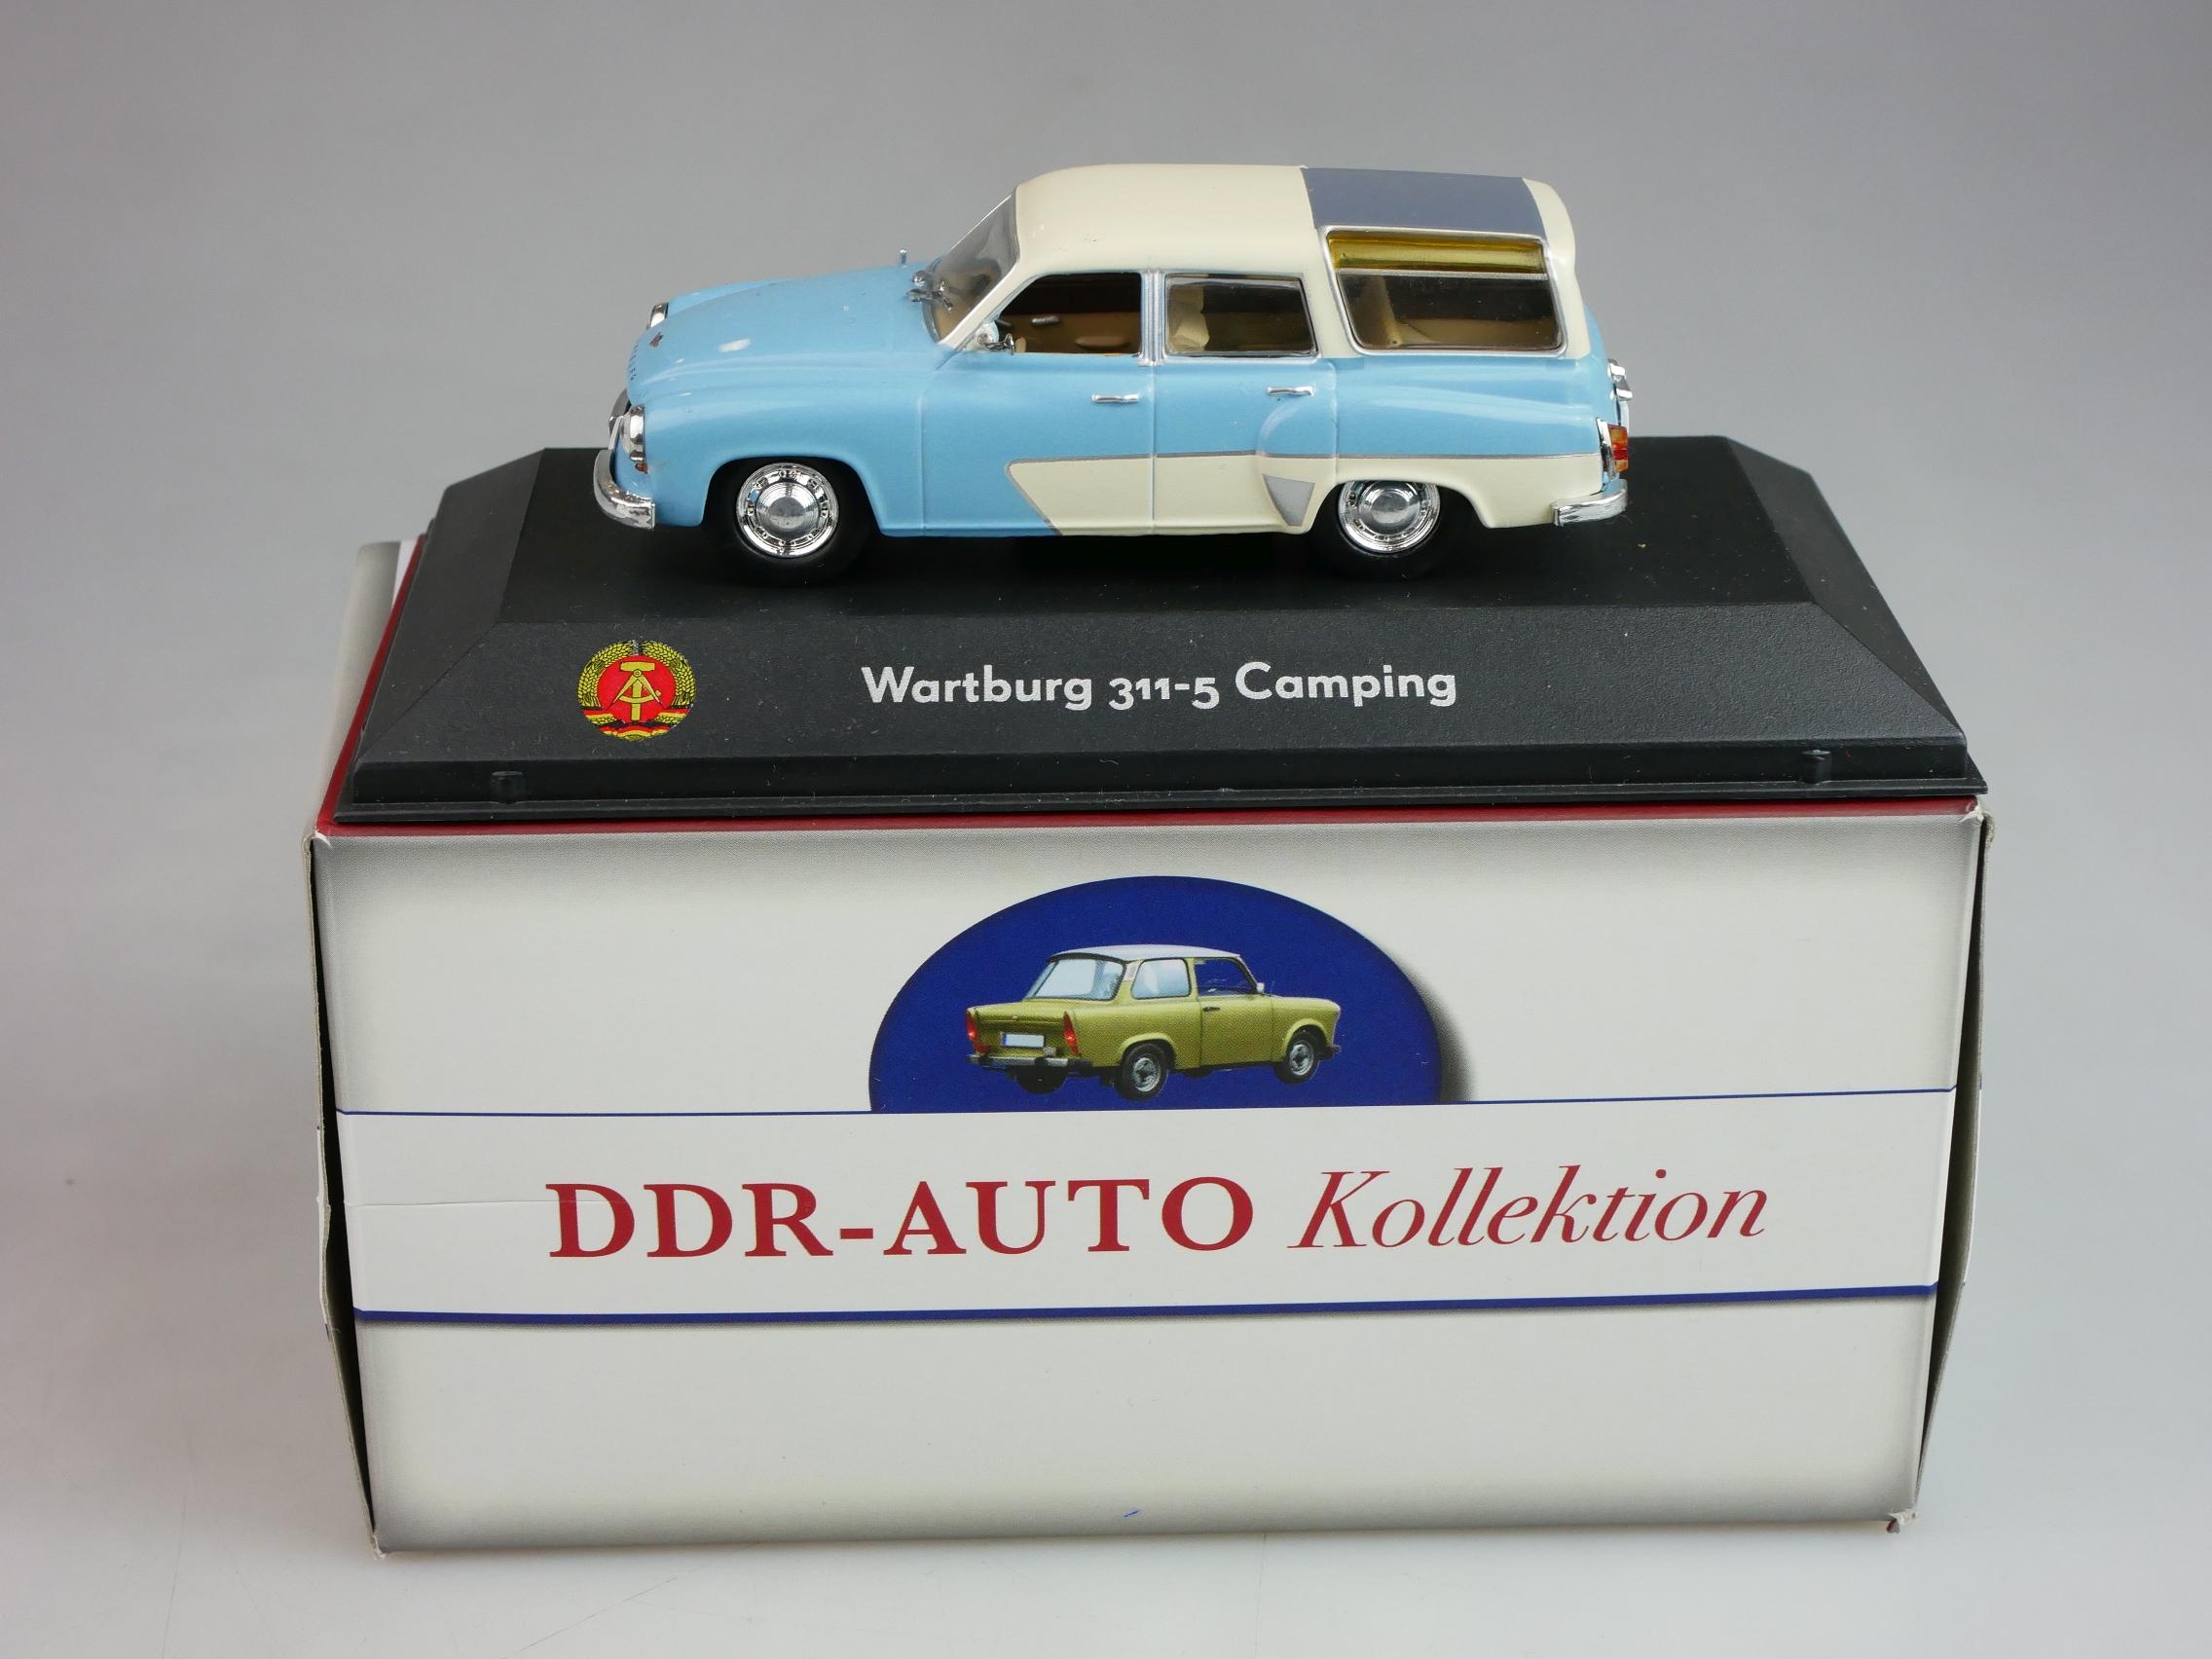 Atlas 1/43 DDR-Auto Kollektion Wartburg 311-5 Camping + Box